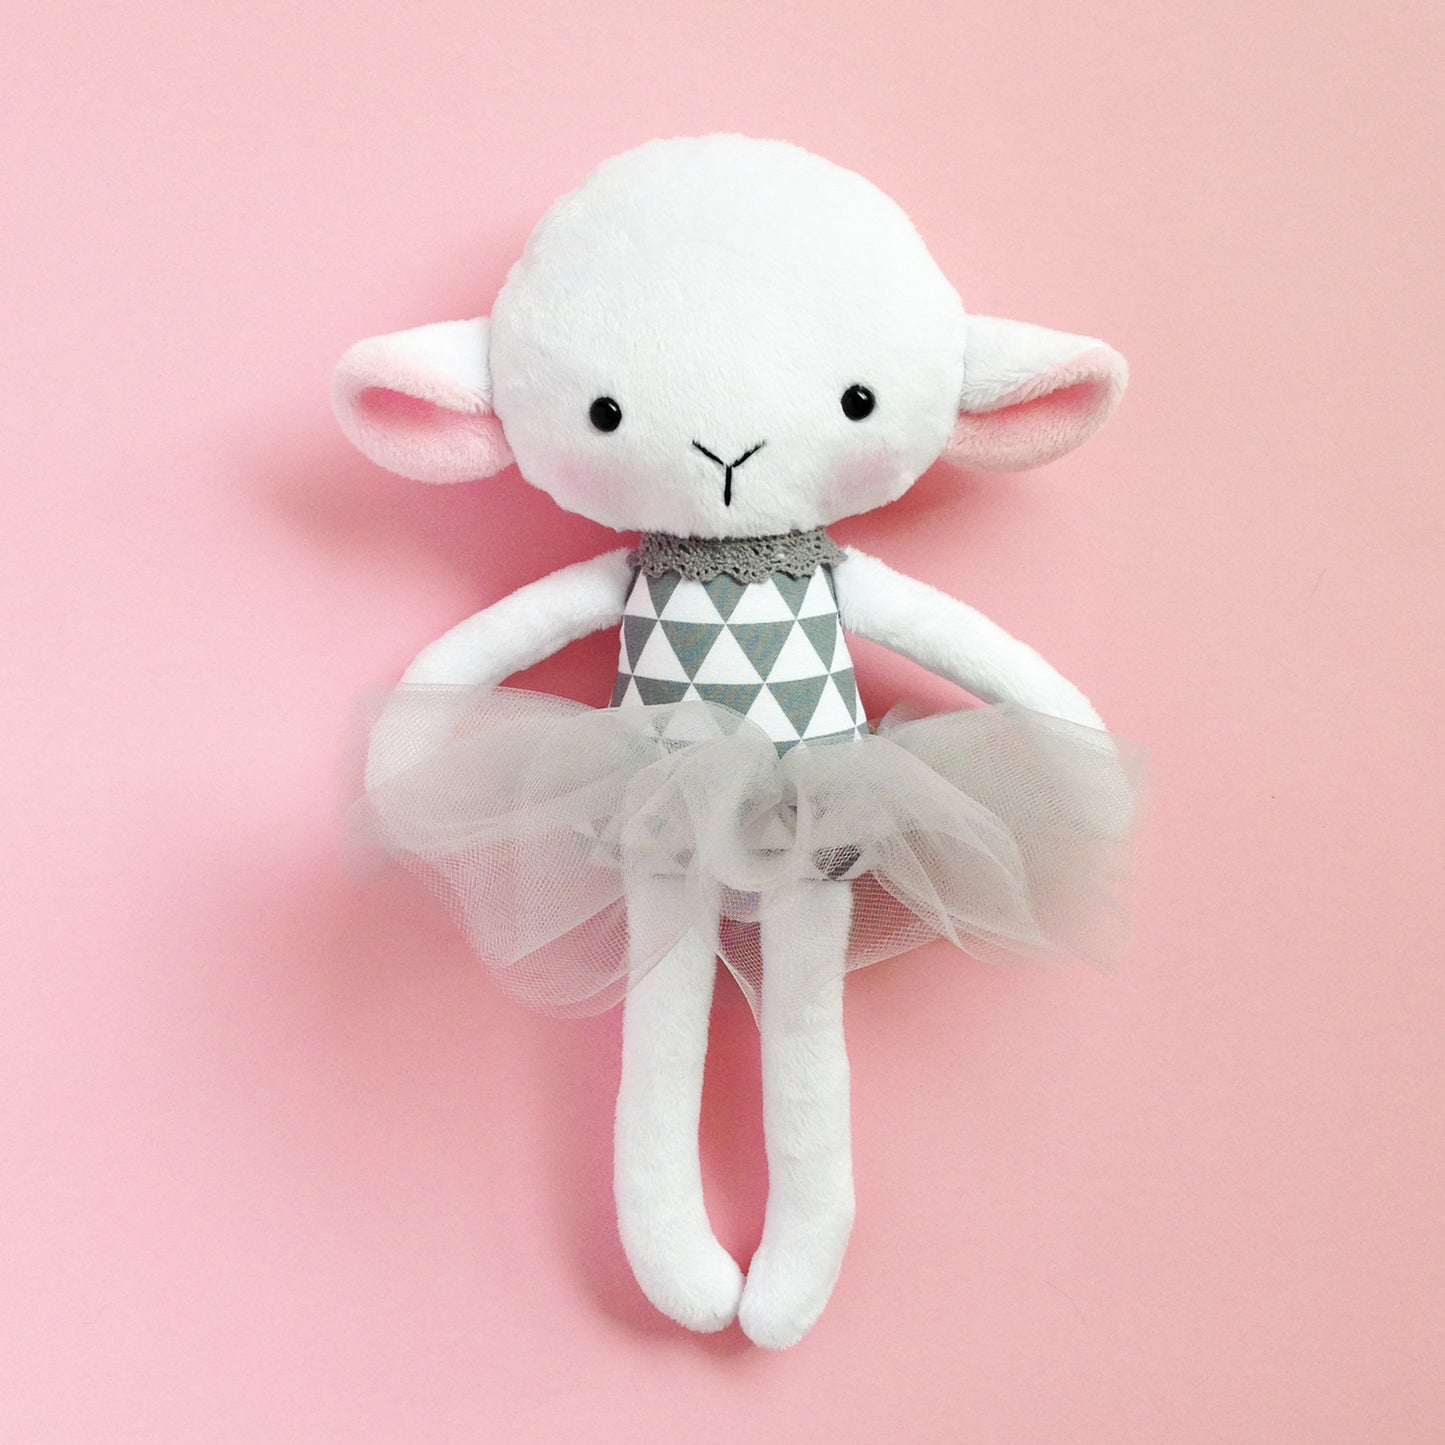 Lamb rag doll - made to order